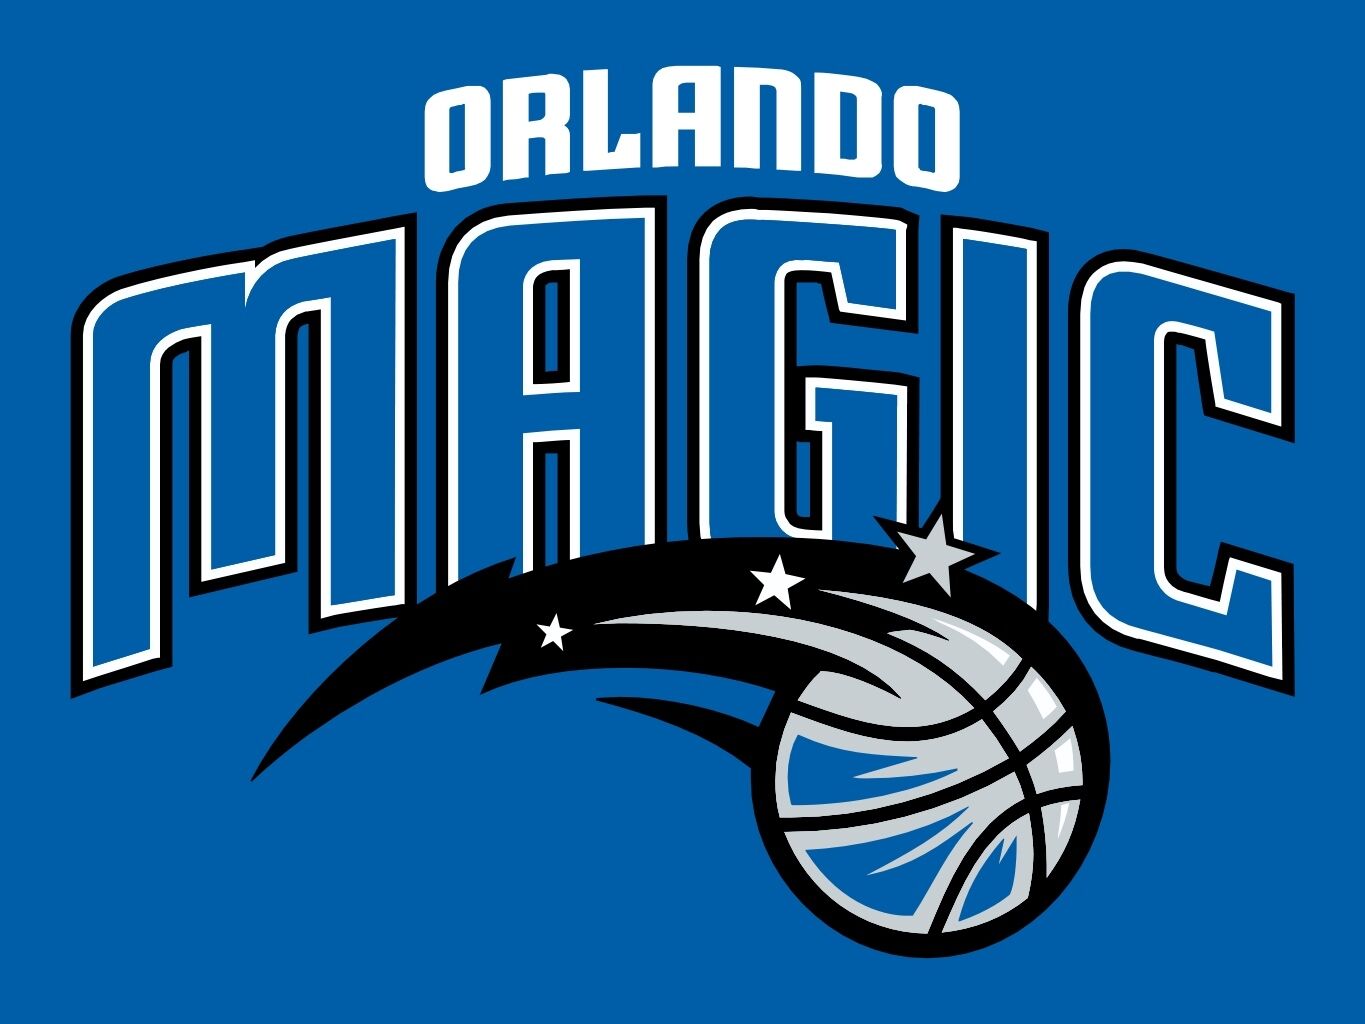 Orlando Magic 'turn the page,' unveil shocking new logo - Yahoo Sports